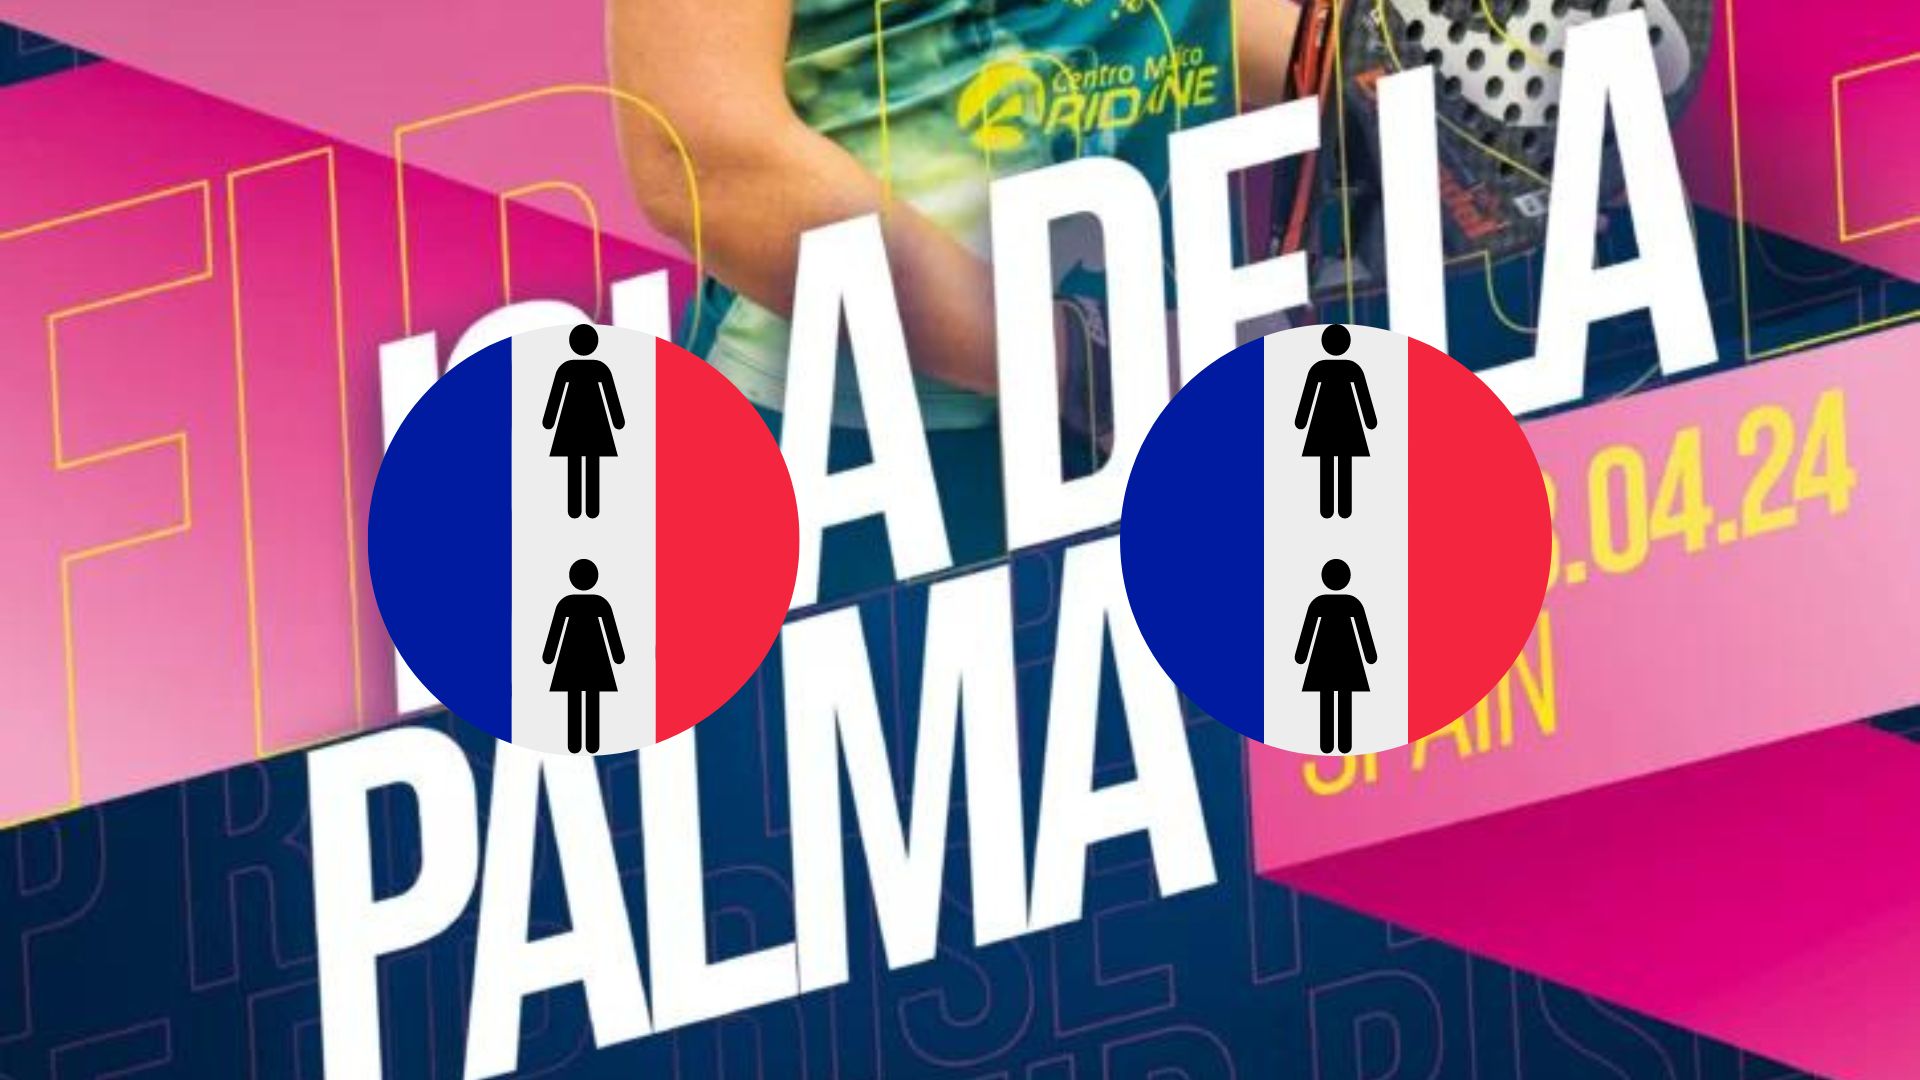 FIP Isla de la Palma – The French program